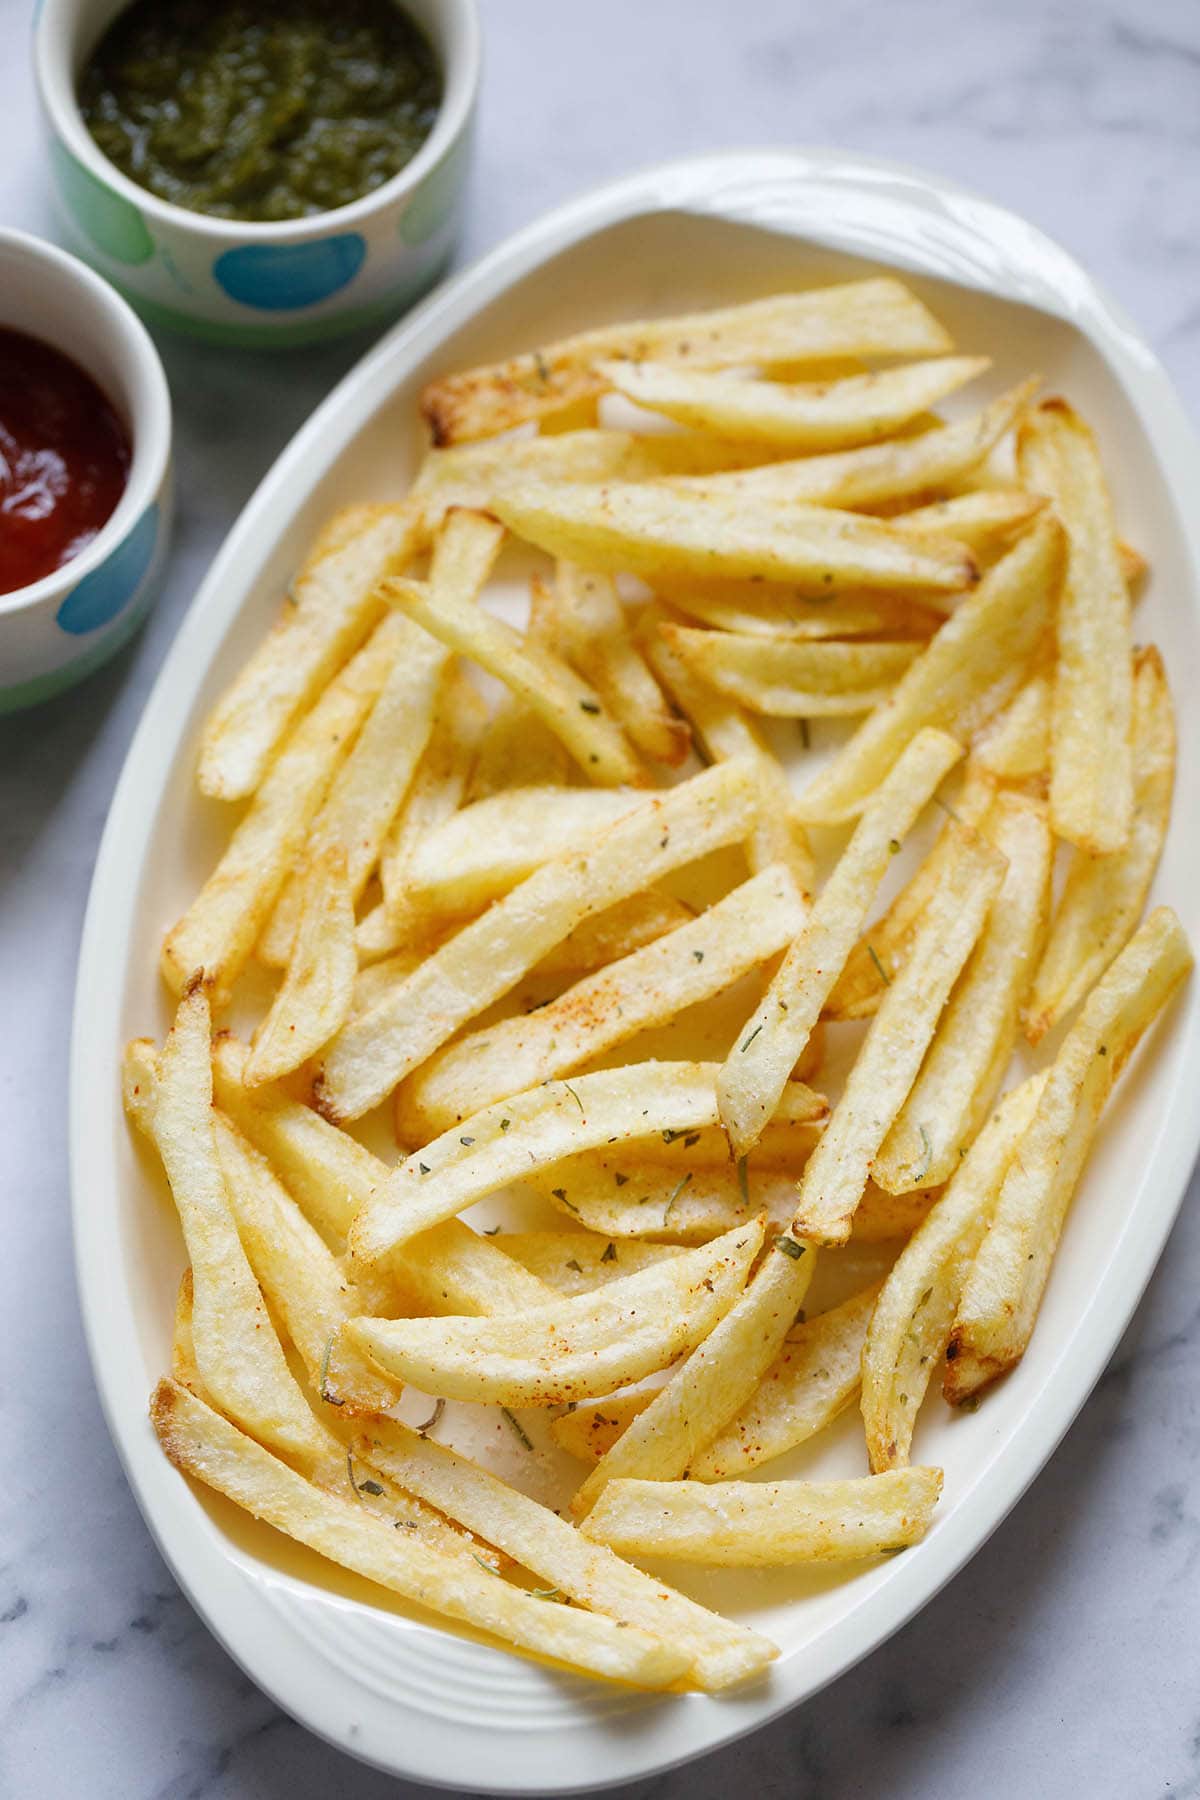 https://www.vegrecipesofindia.com/wp-content/uploads/2021/04/french-fries-recipe-1.jpg